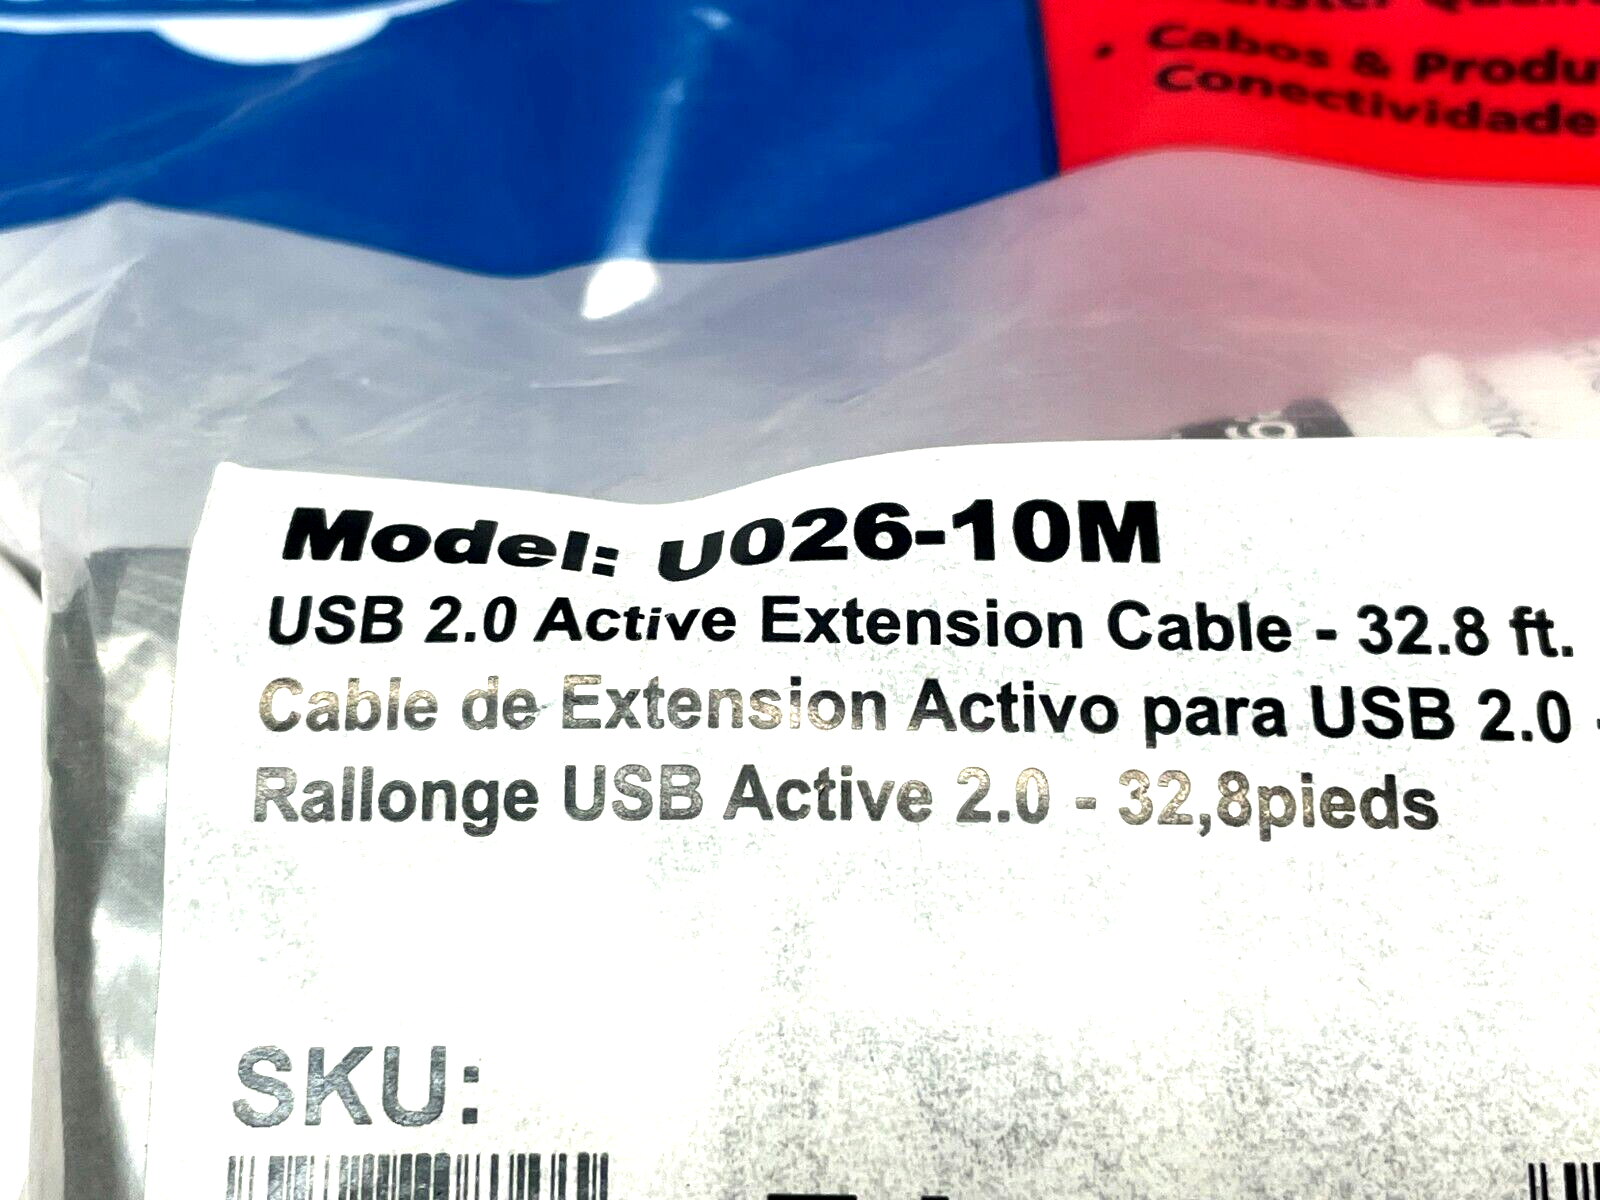 Tripp-Lite U026-10M USB 2.0 Cable A Female to A Male 10m